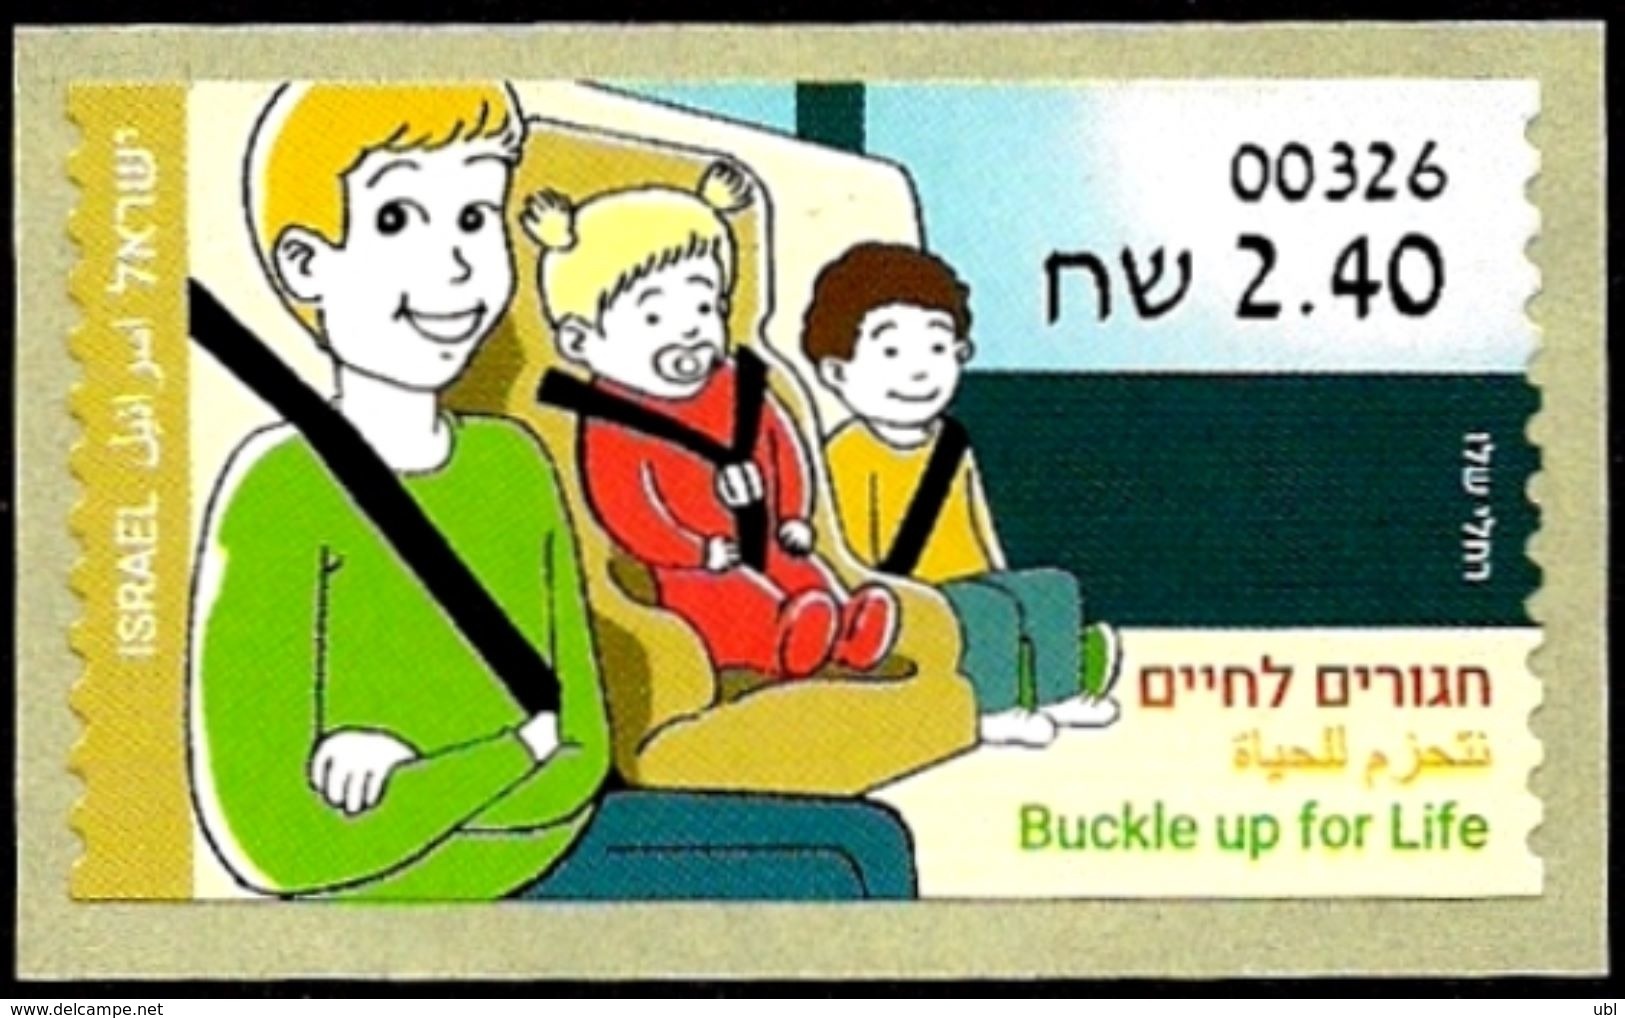 ISRAEL 2017 - Road Safety In Israel - Buckle Up For Life - Rishon LeZion ATM # 326 Label - MNH - Sonstige (Land)